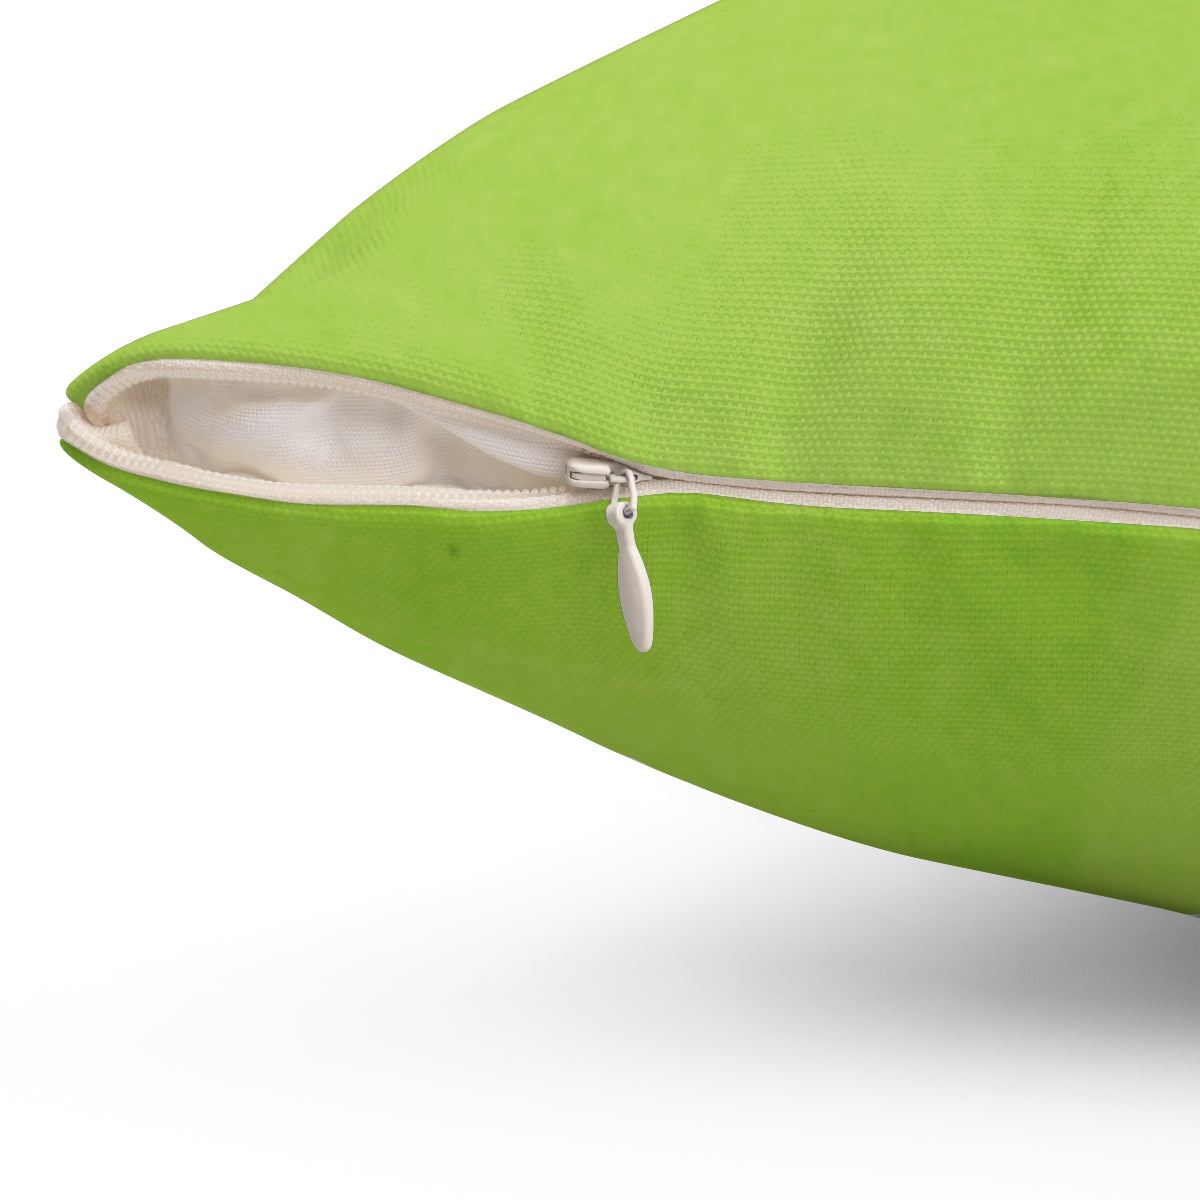 SL Green Logo Square Pillow